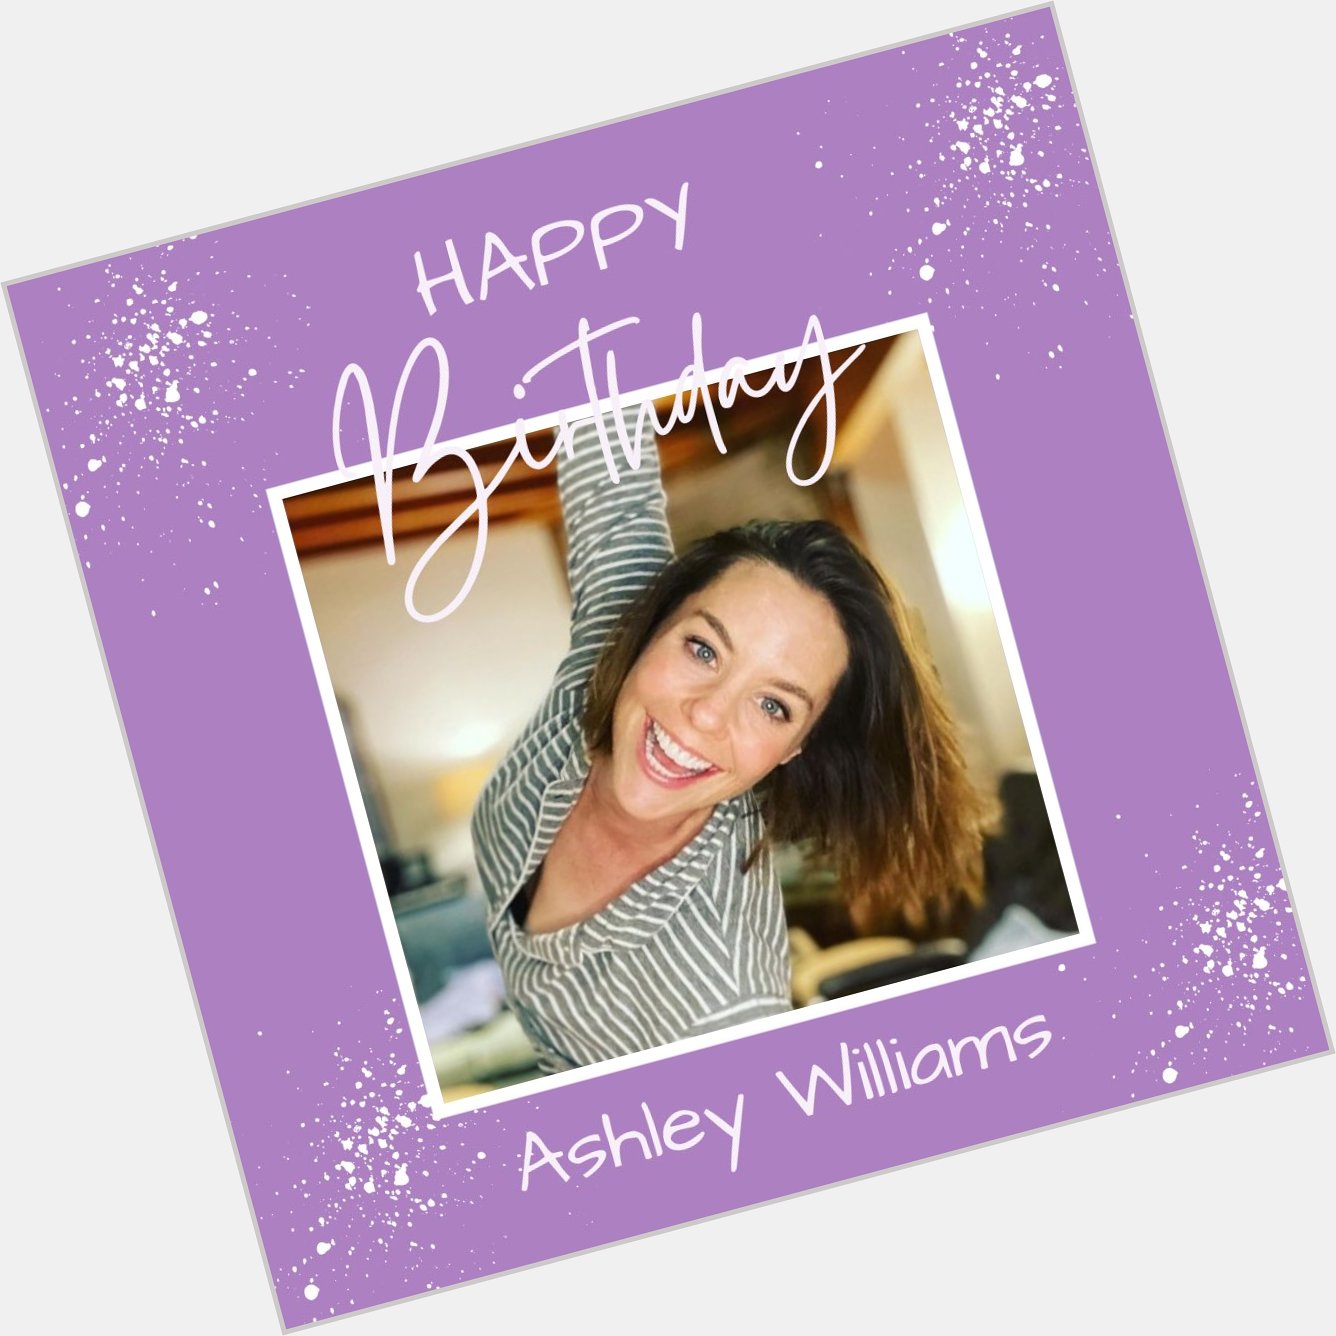 Happy birthday Ashley Williams  